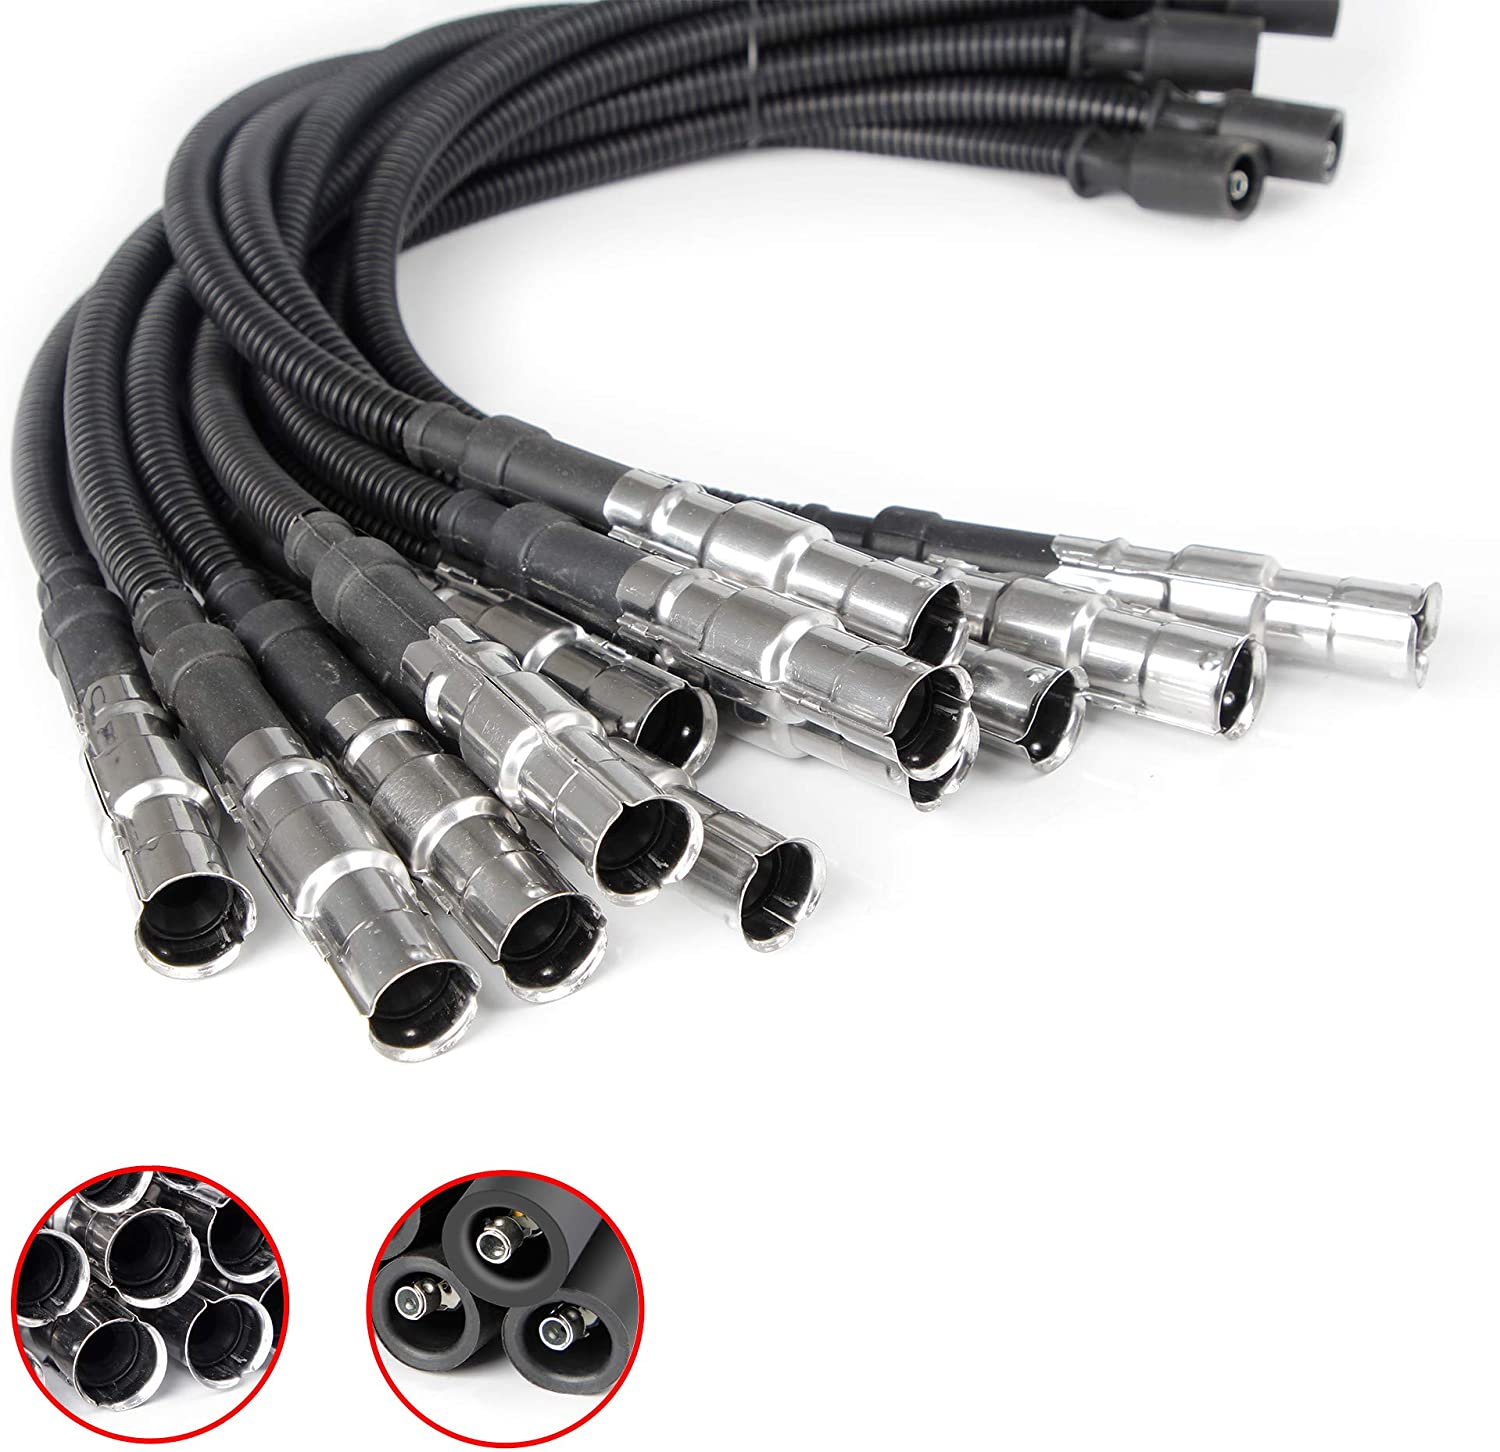 Carbole 7mm 12 pcs Spark Plug Ignition Wireset For Mercedes Benz C-Class E-Class ML SLK 320 350 1997-2009 Replacement Wire Set for UF359 5C1226 Coils (Black( Part NO.1121500118 1121500218))